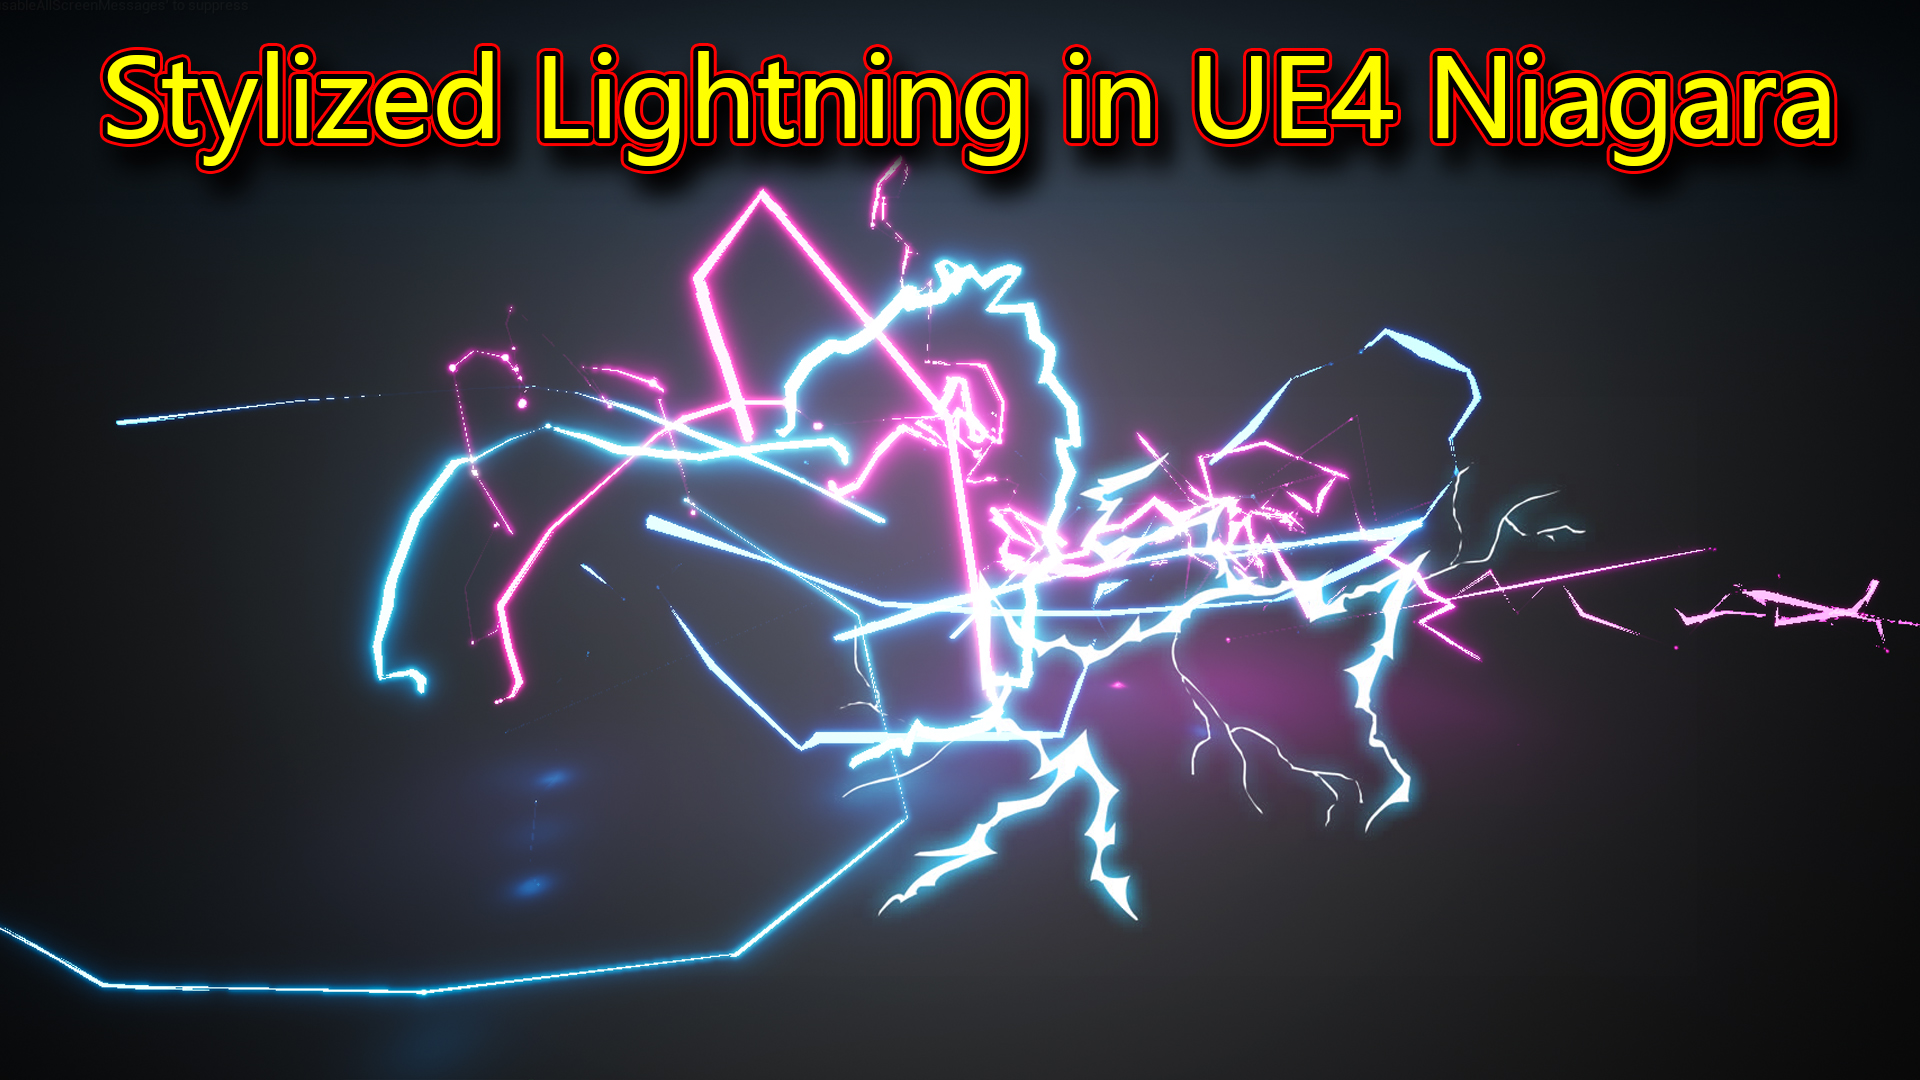 UE4 Niagara Stylized Lightning | Files on Patreon